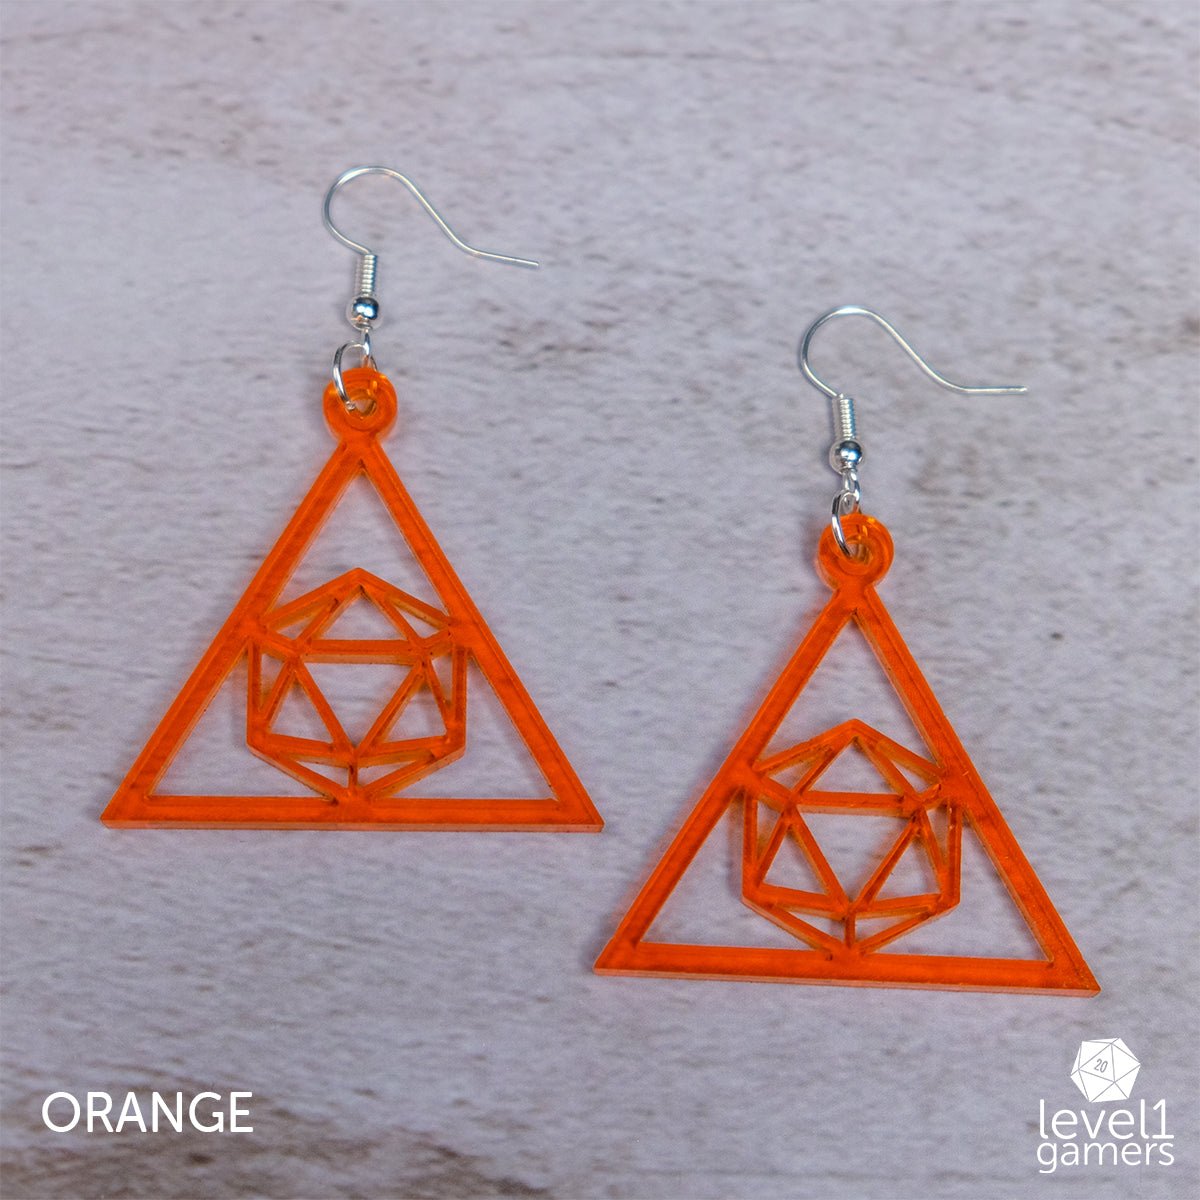 D20 Triangle Acrylic Earrings  Level 1 Gamers Pendant Orange 